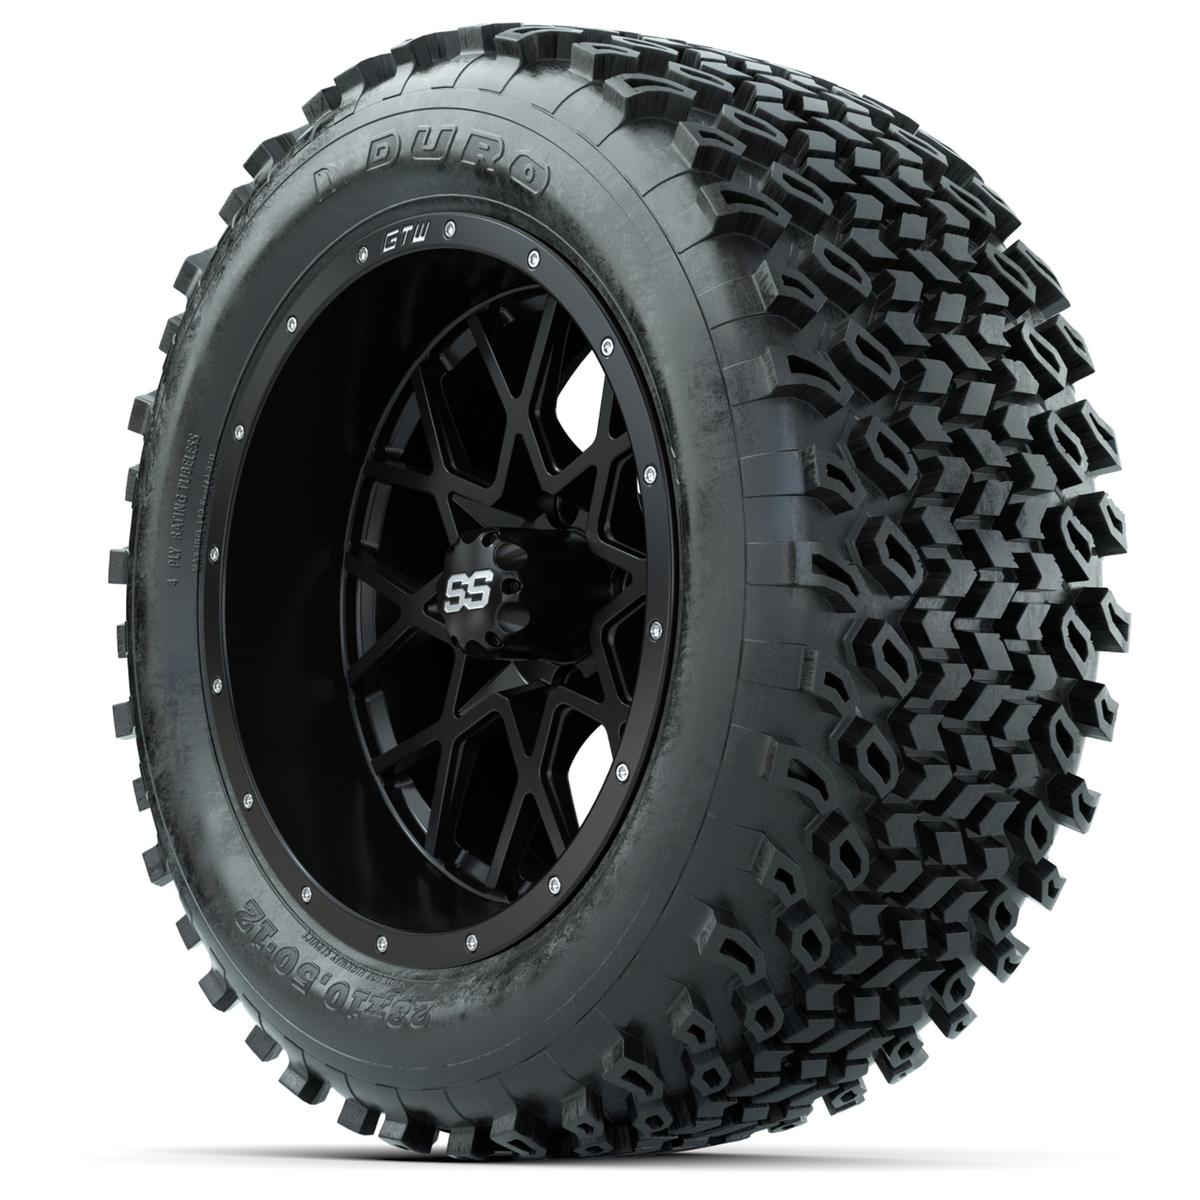 Set of (4) 14 in GTW Vortex Wheels with 23x10-14 Duro Desert All-Terrain Tires